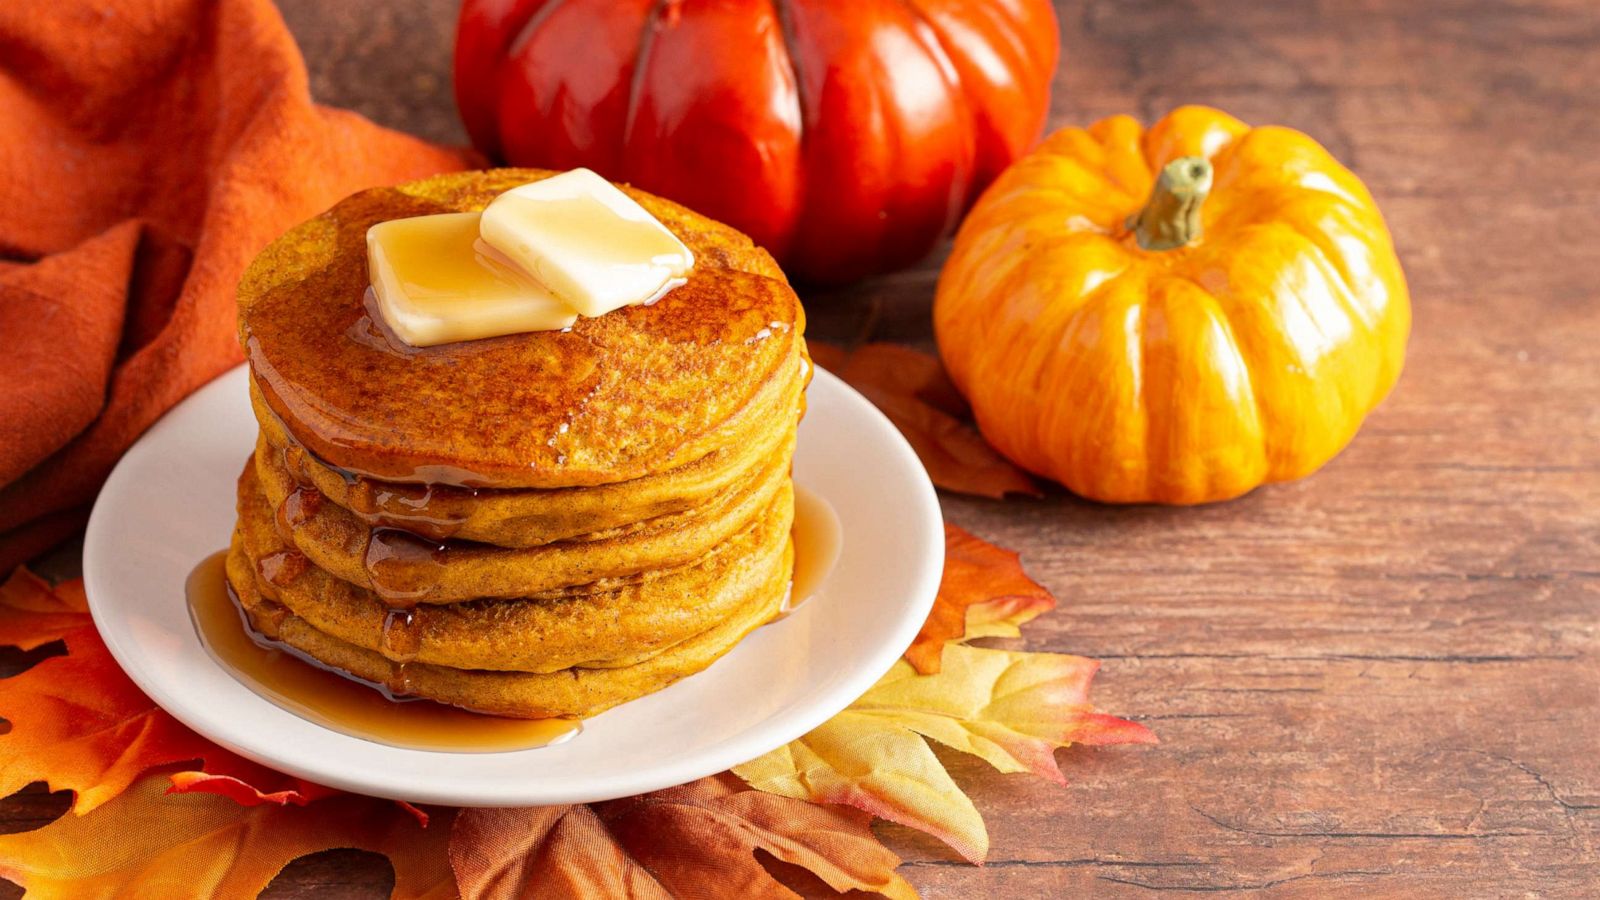 You Can Get an Autumn Leaves Pancake Pan That Will Make a Seasonal Breakfast